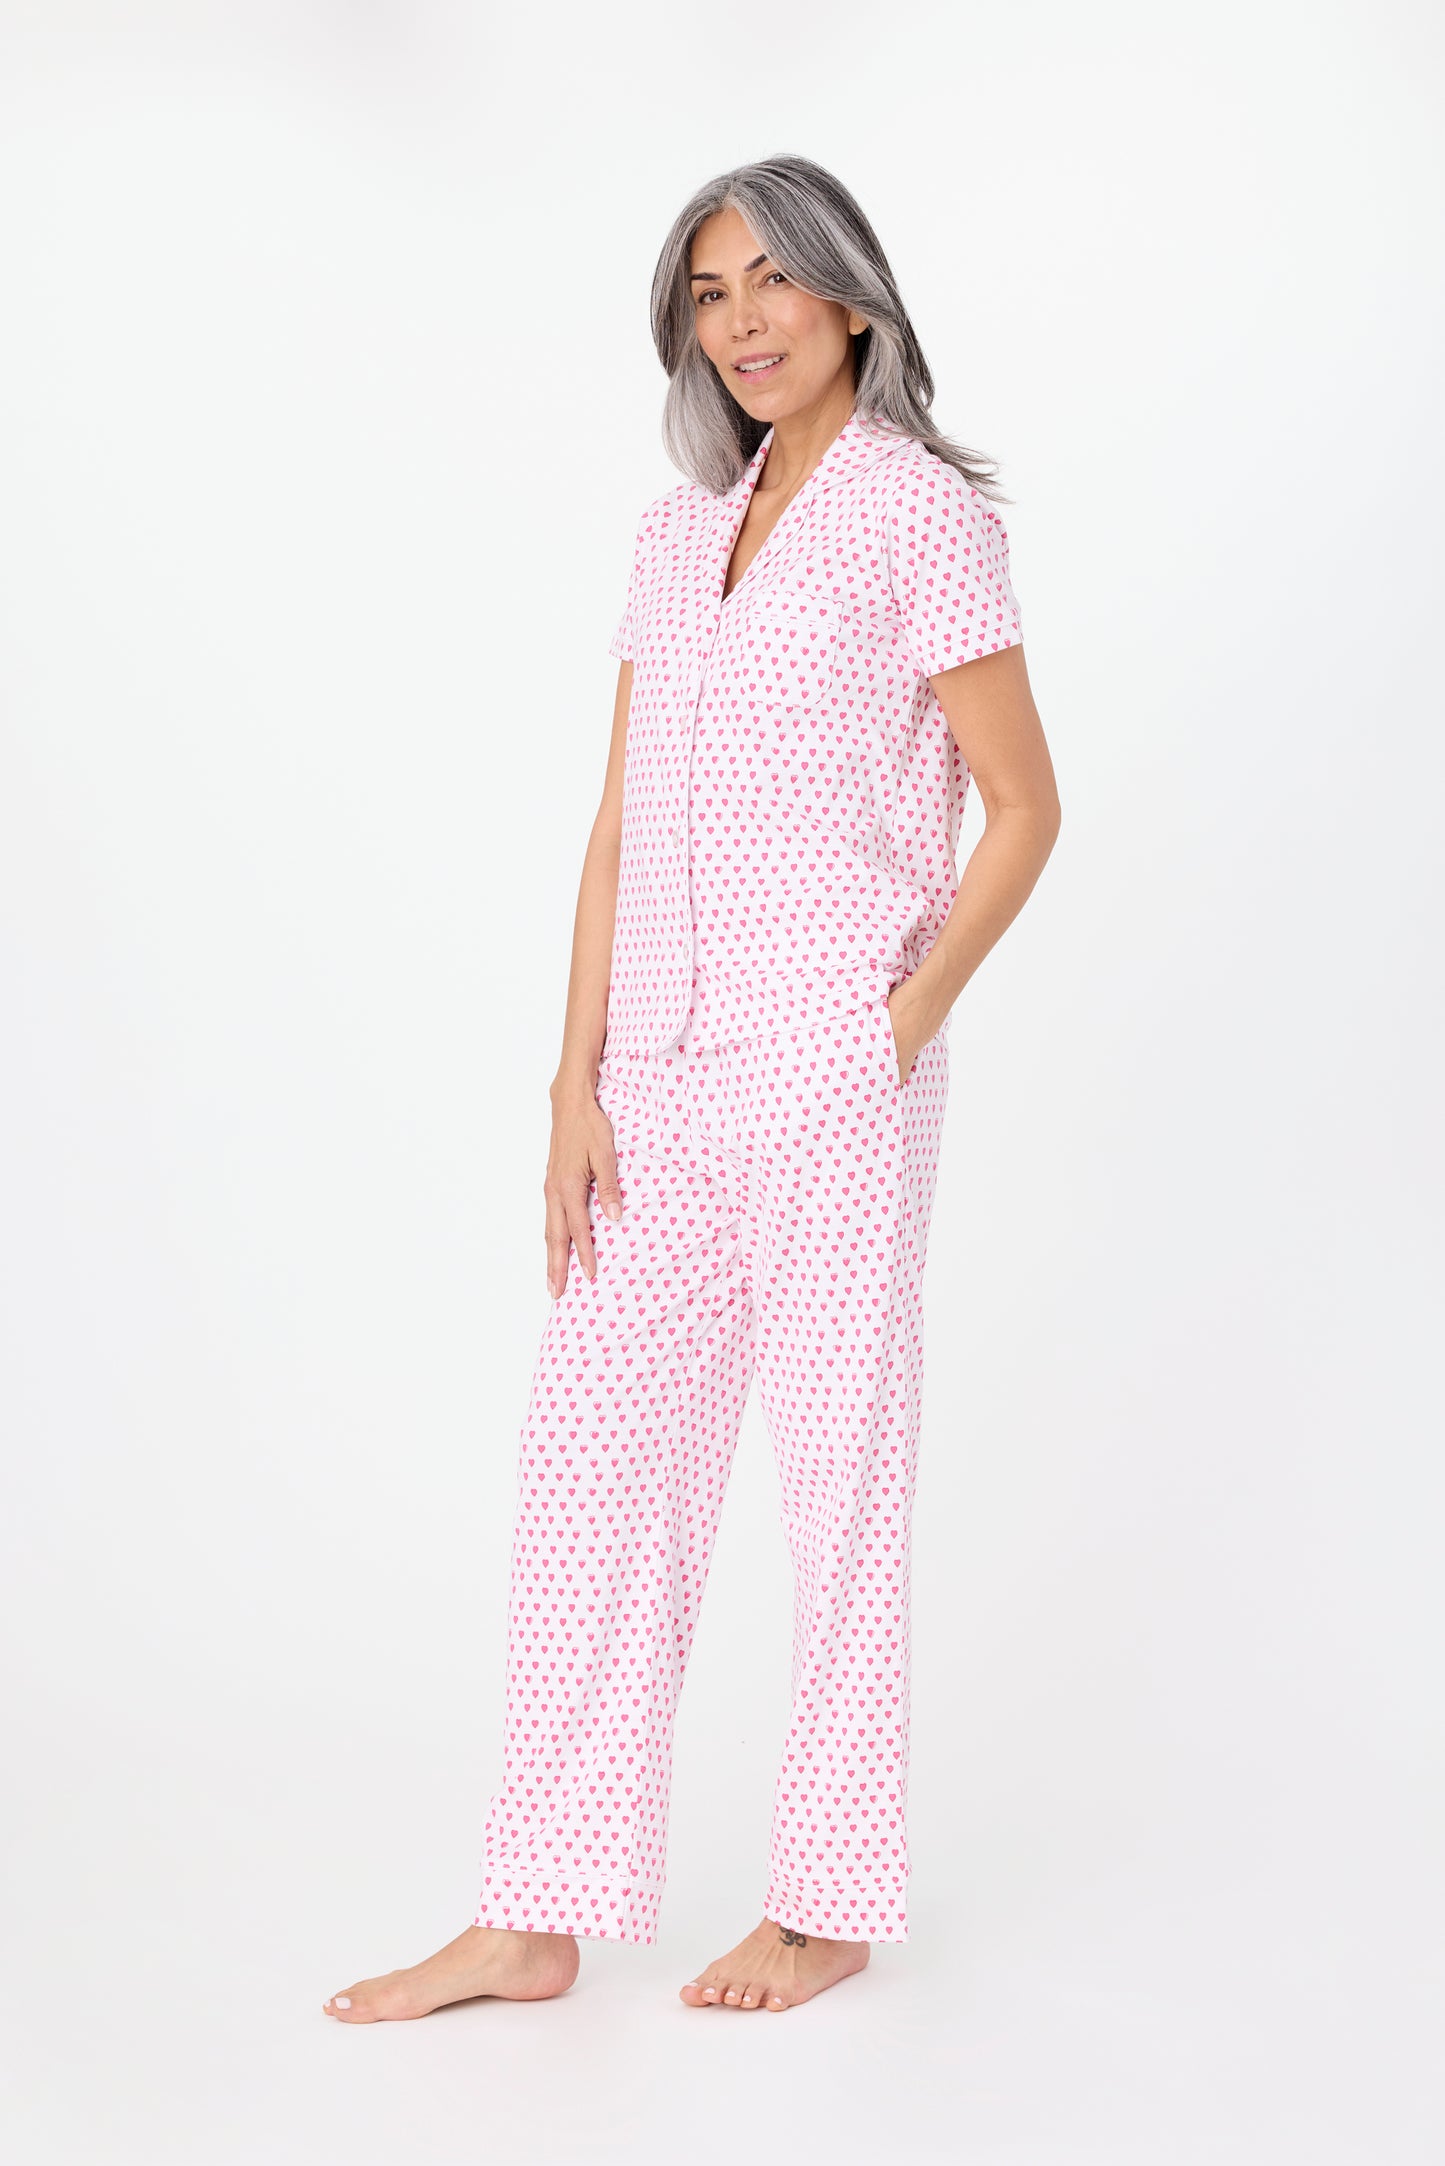 Roller Rabbit Pink Hearts Fiora Pajamas